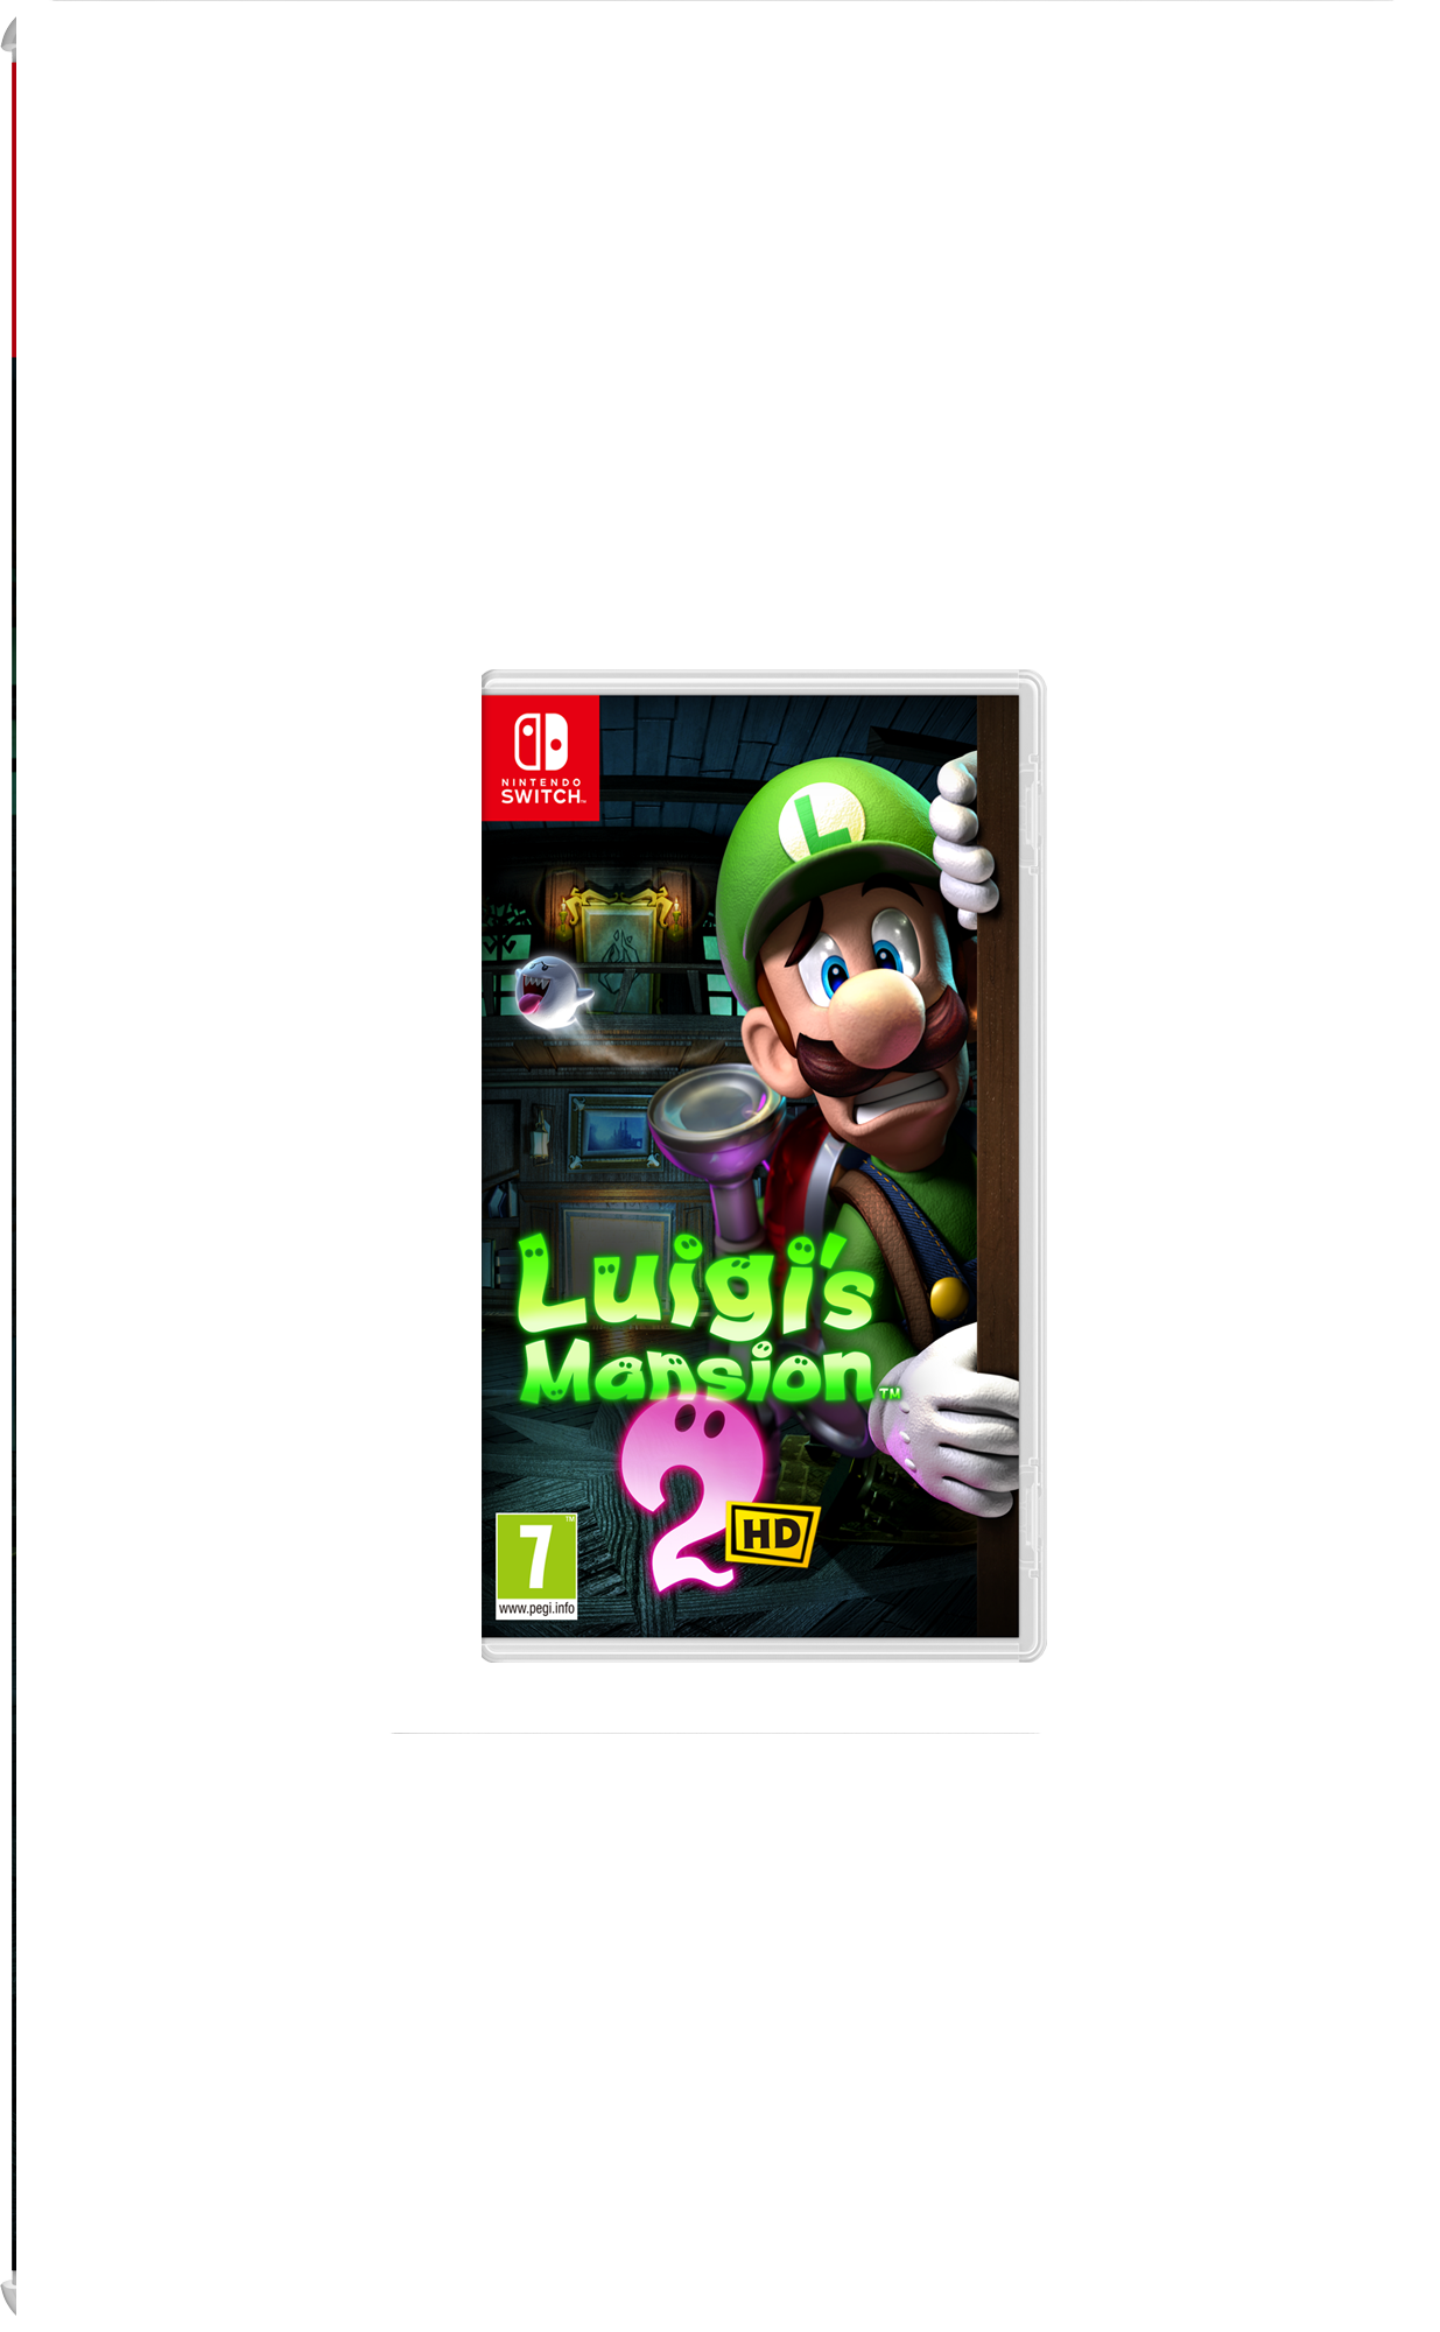 Pre-order games: Luigi's Mansion 2 HD